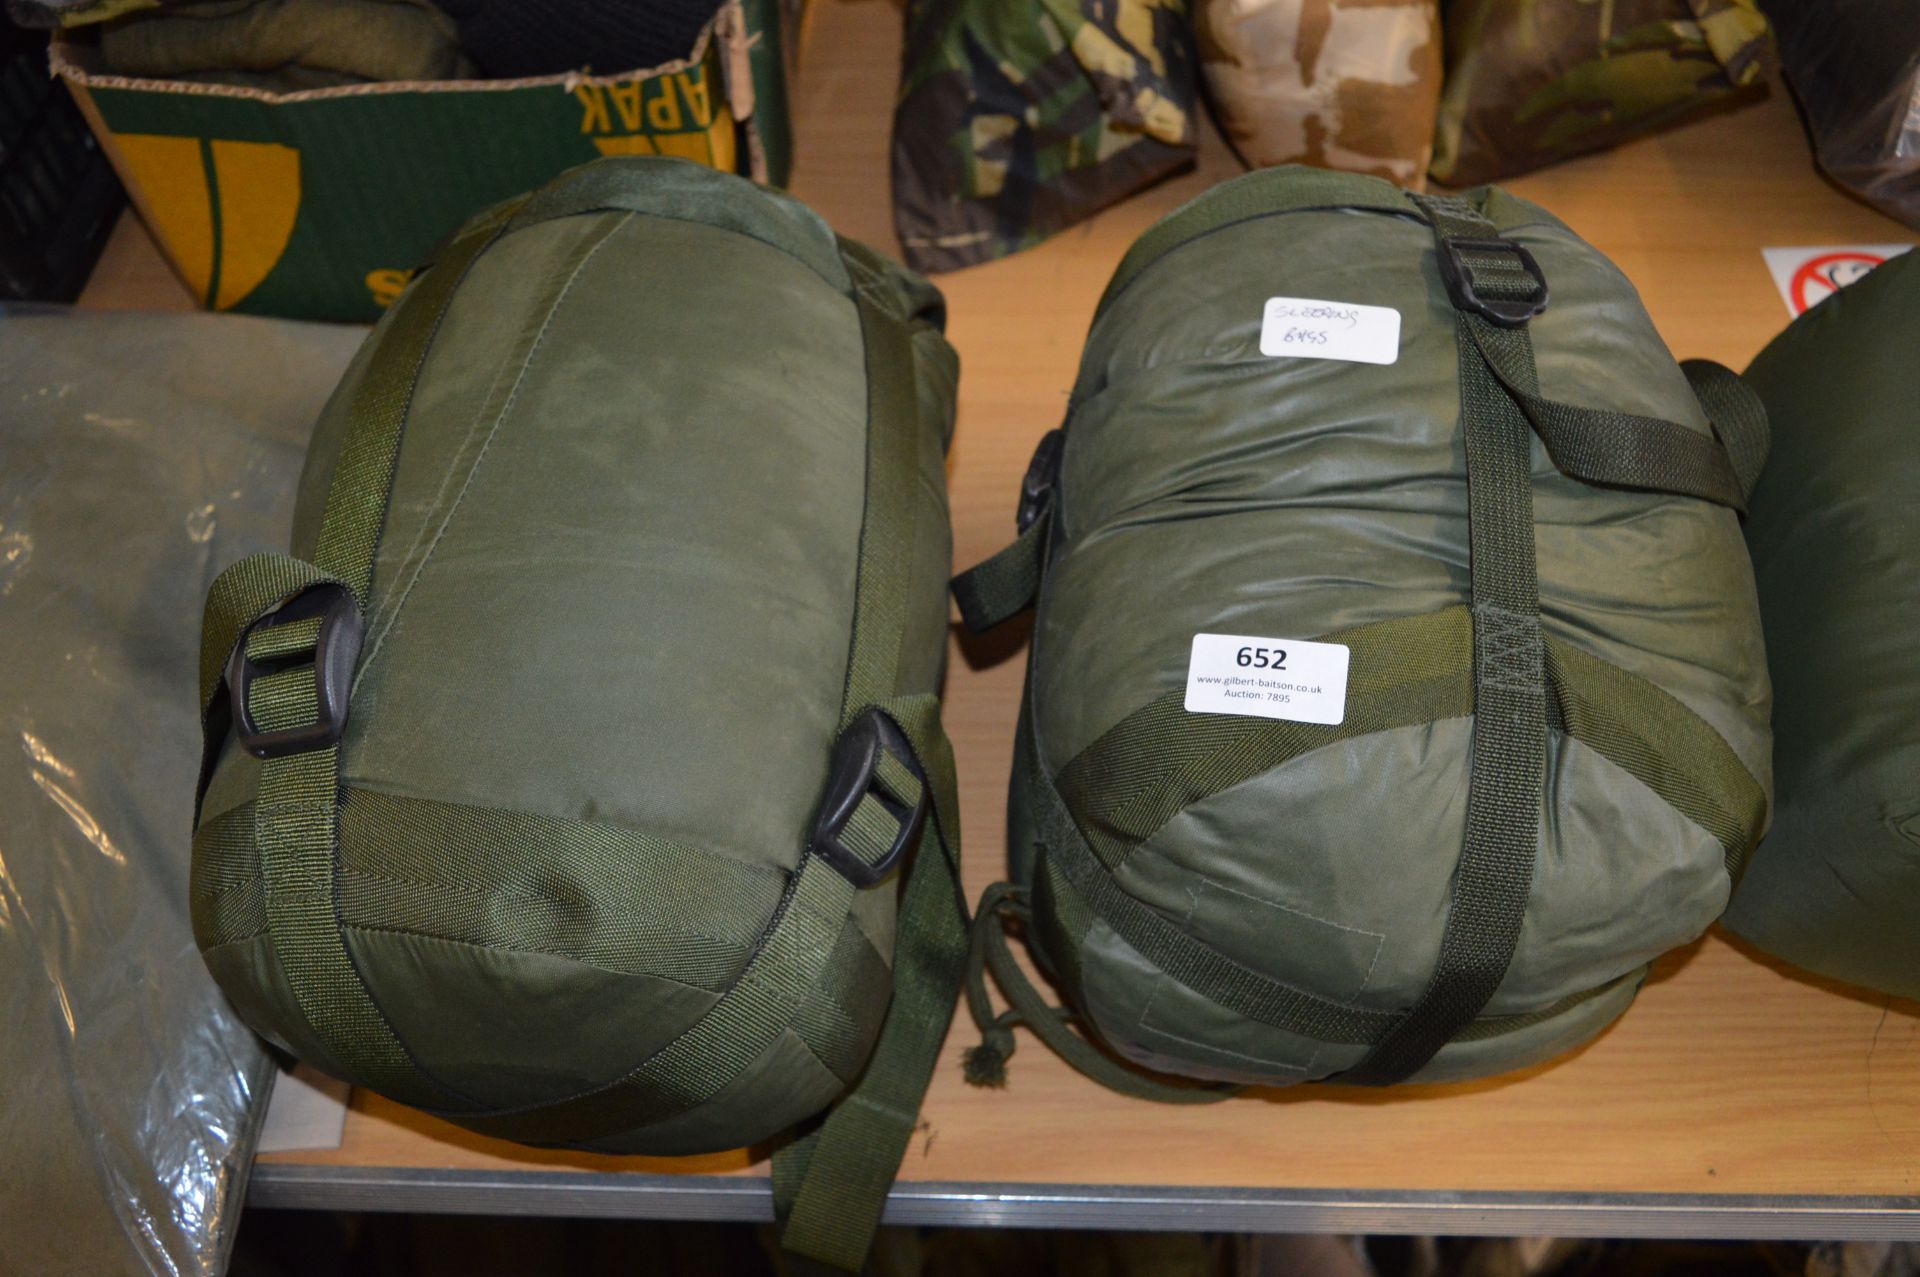 Two Military Sleeping Bags